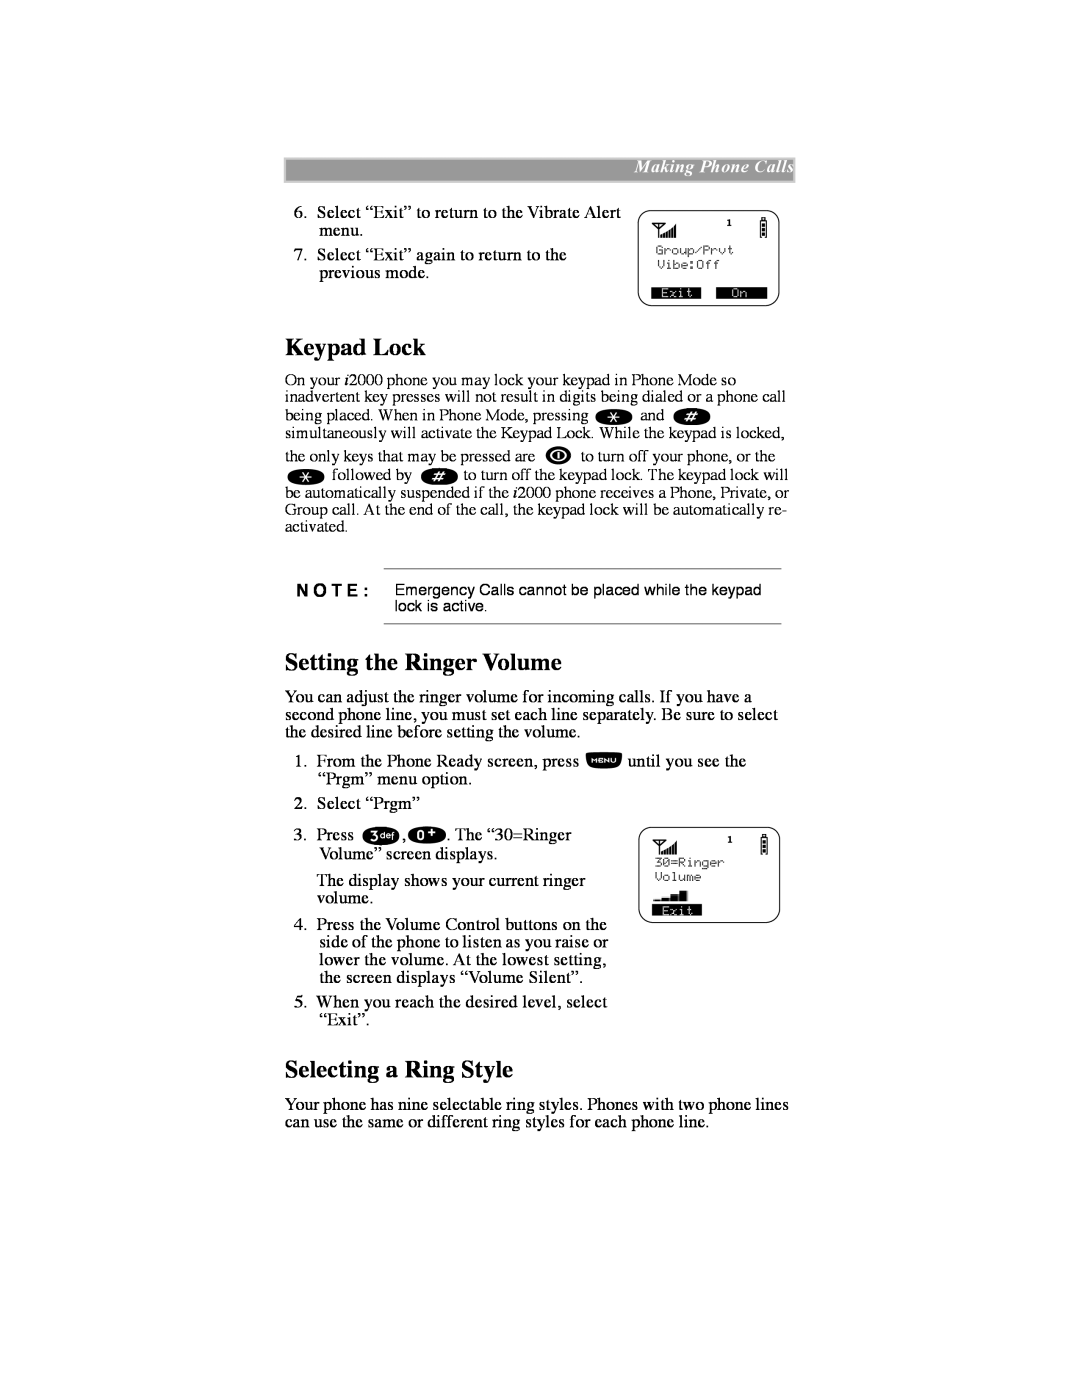 Motorola iDEN manual Keypad Lock, Setting the Ringer Volume, Selecting a Ring Style, Making Phone Calls, Group/Prvt VibeOff 